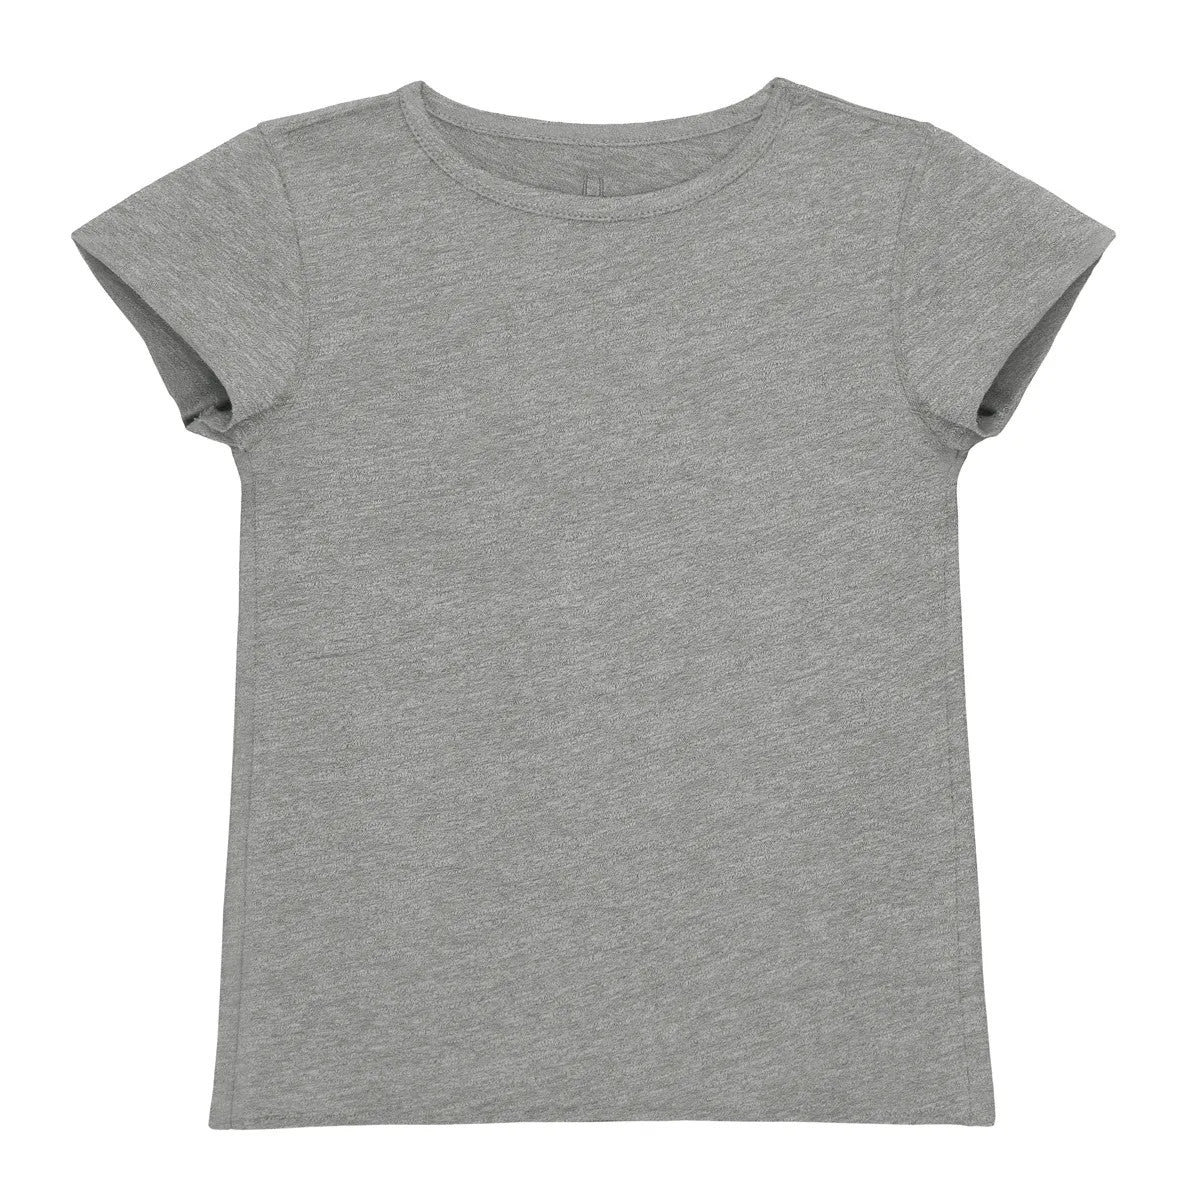 Little Hedonist unisex organic cotton t-shirt in grey